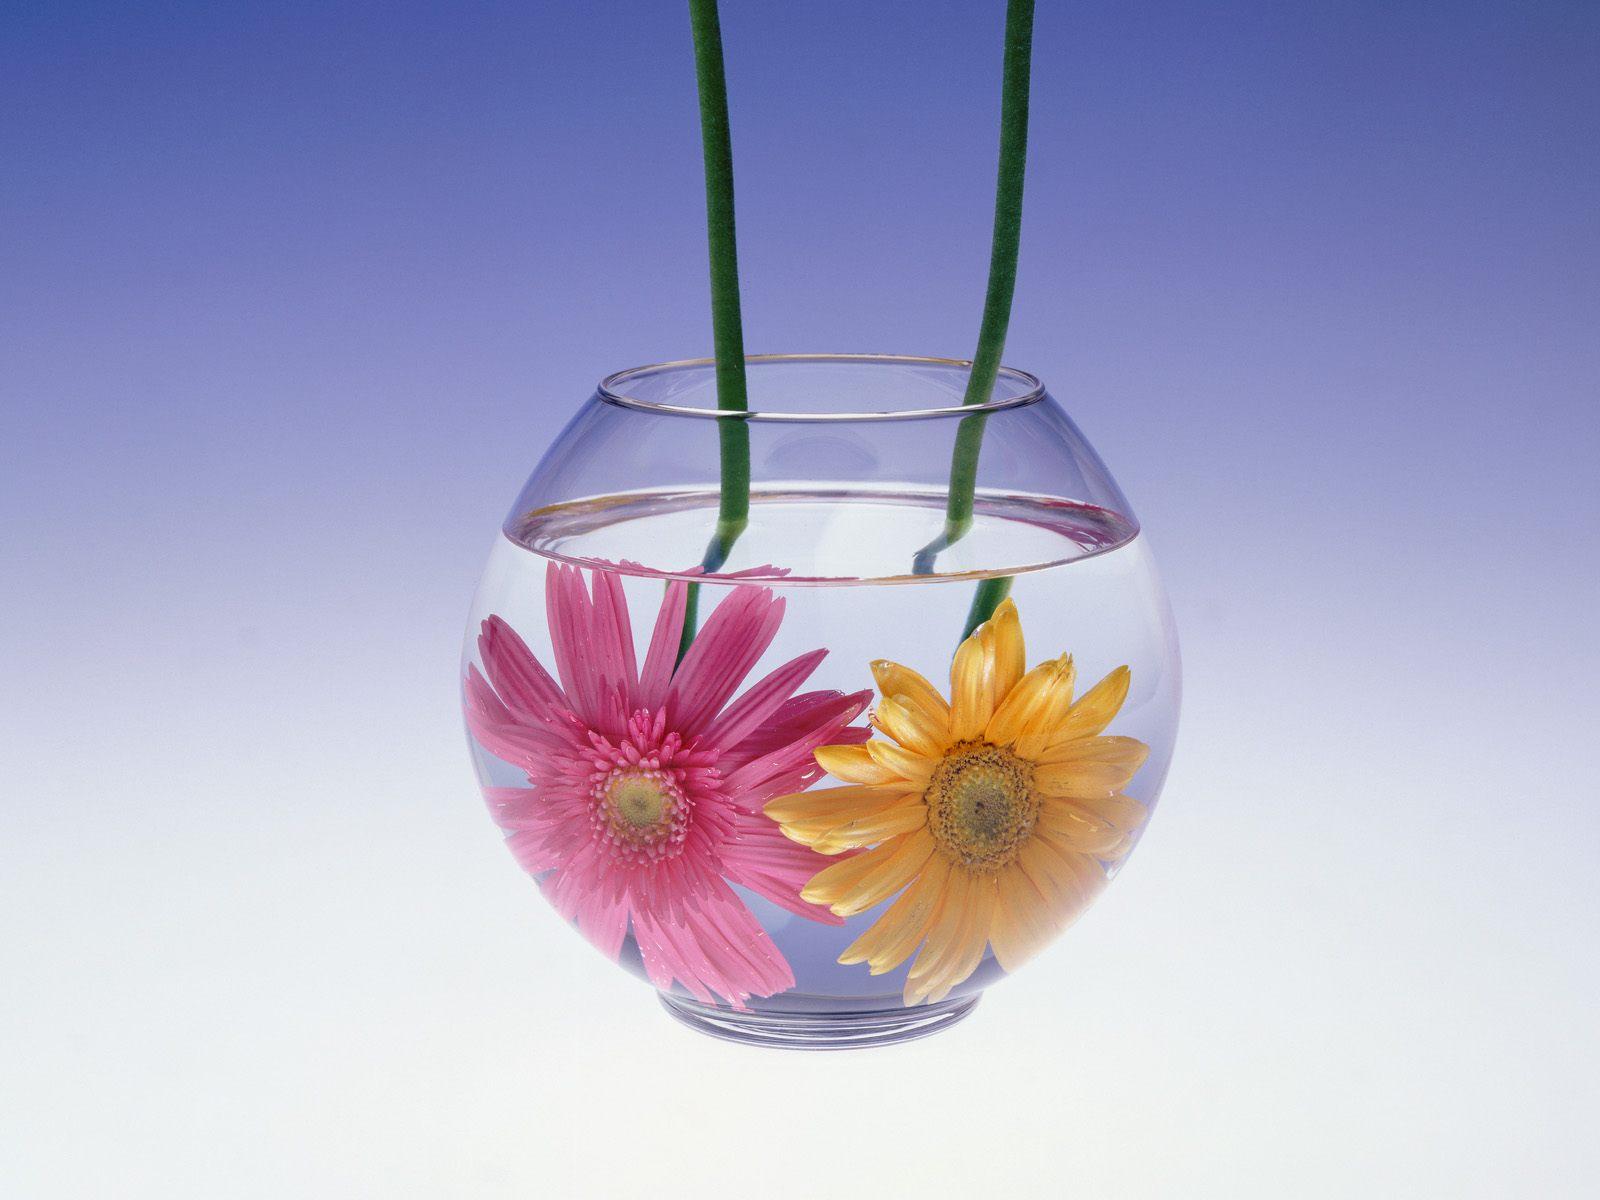 Gerbera flower on a desktop, beautifully arranged.